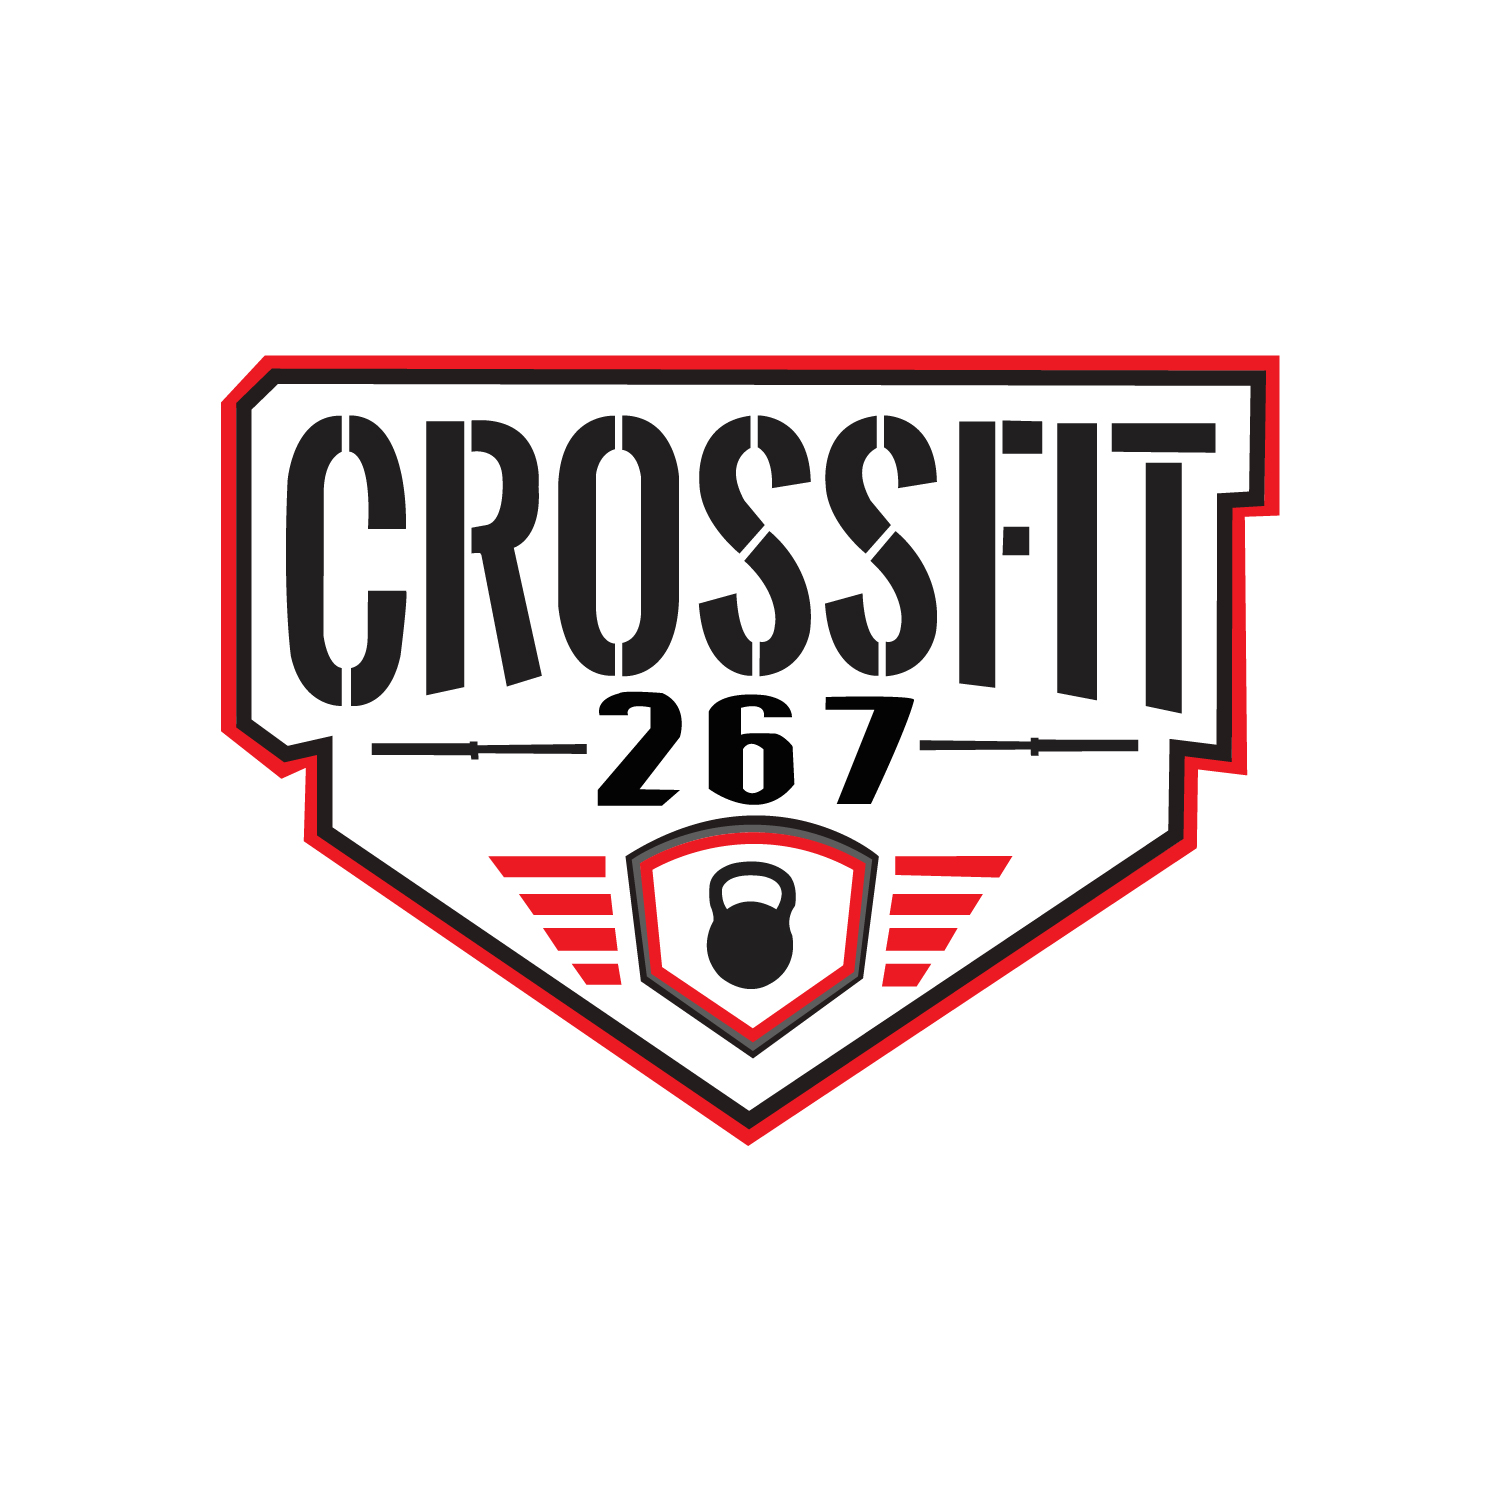 CrossFit 267 logo